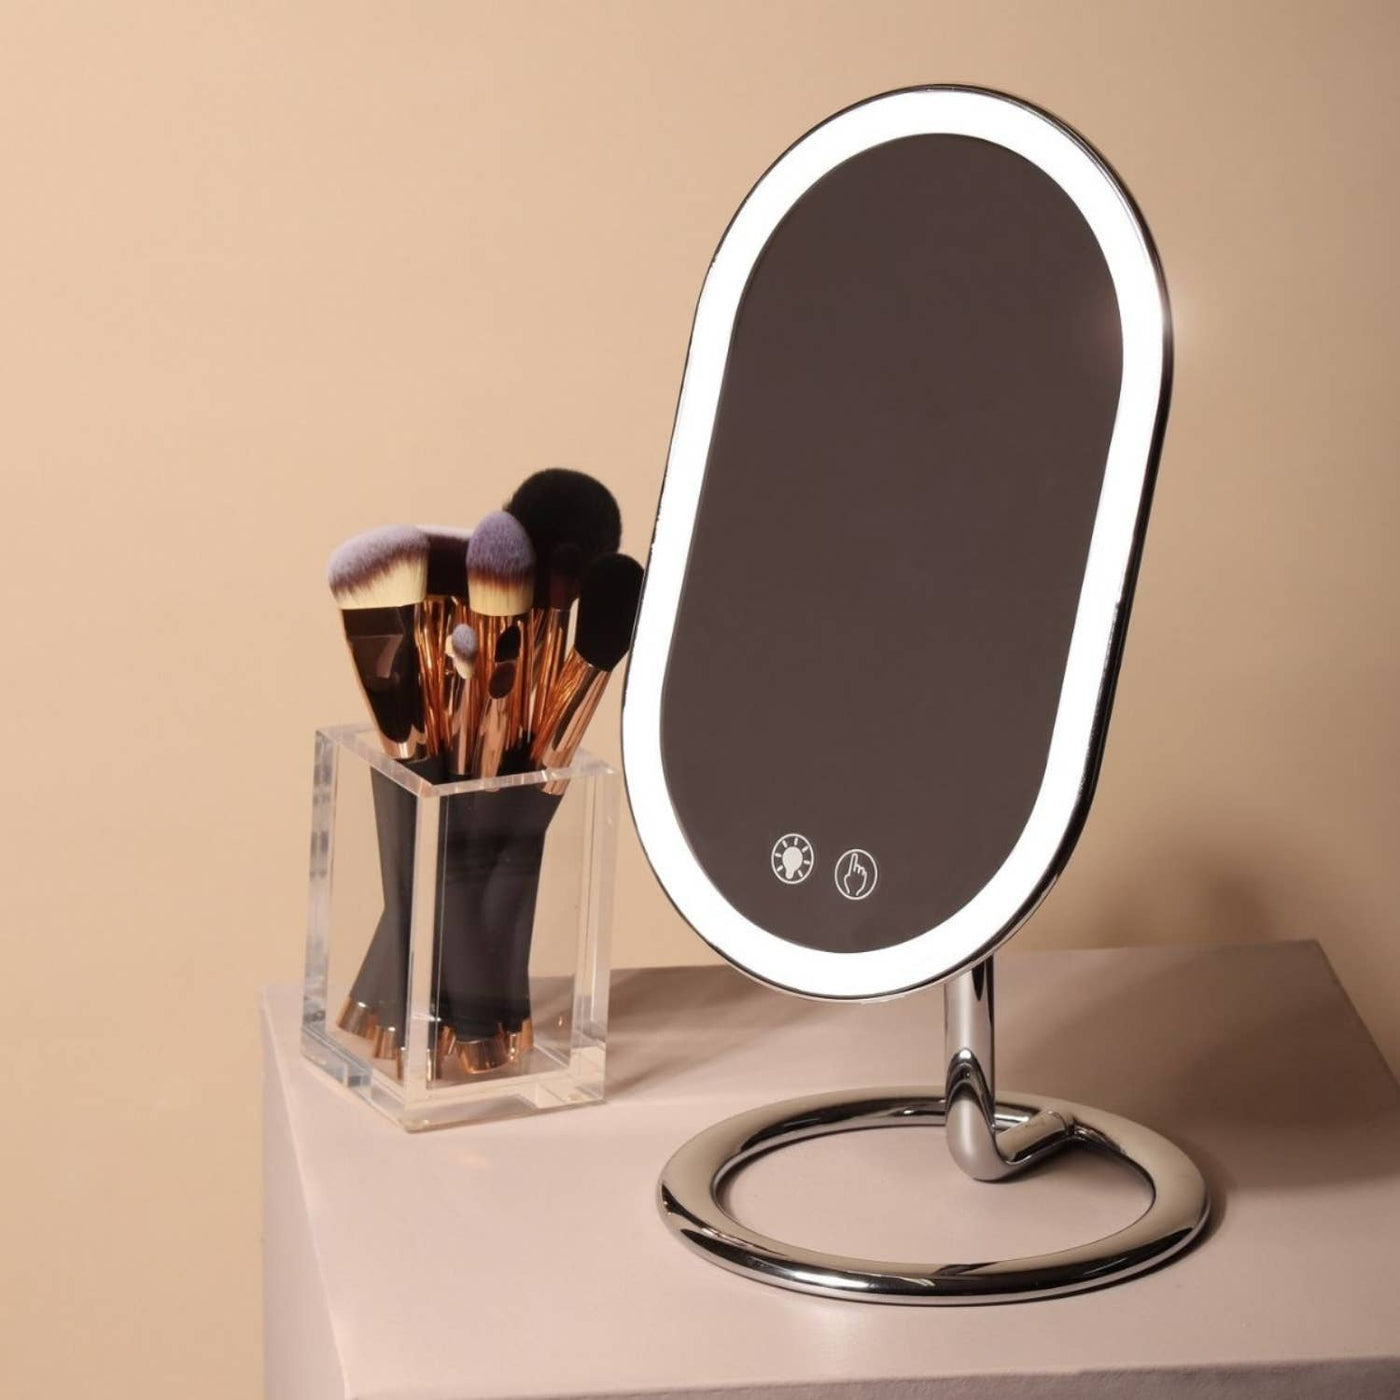 Vera Oval Vanity Mirror with 3 LED Light Settings: Chrome